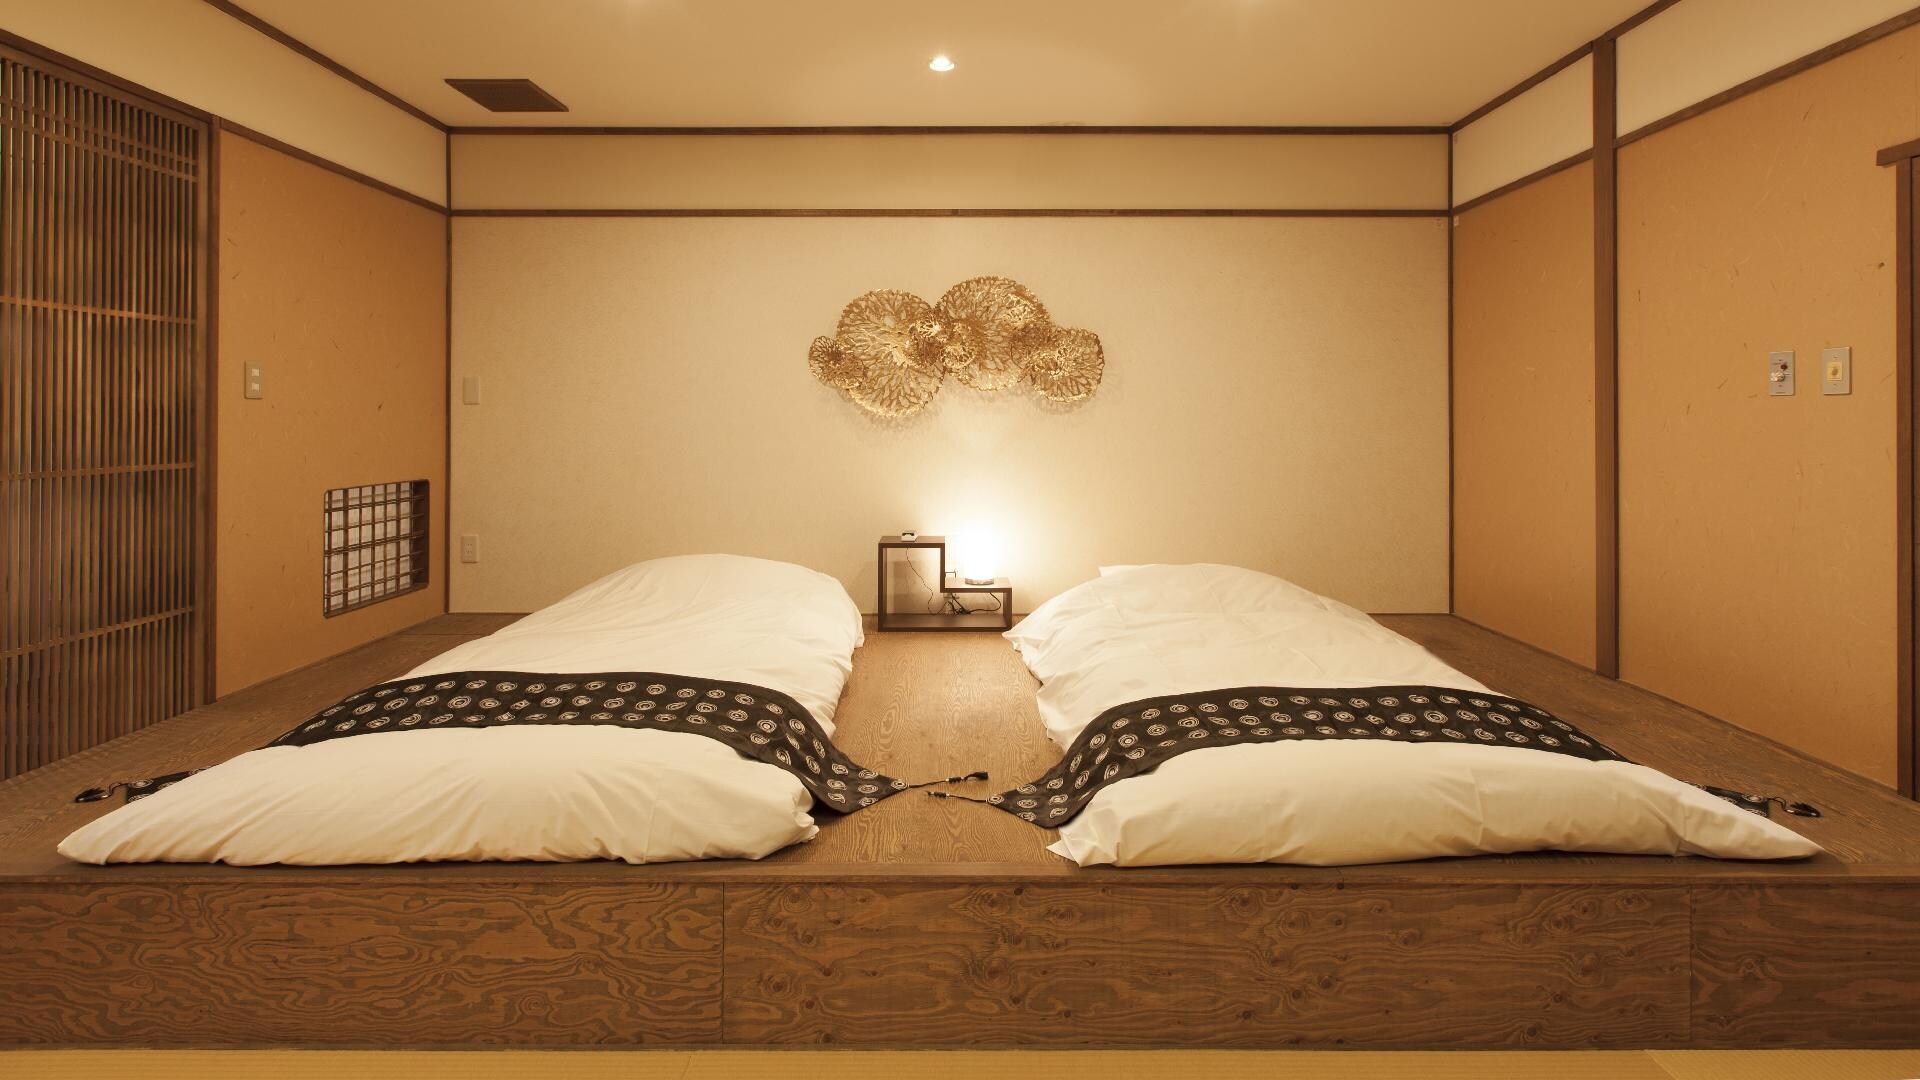 Kamar Jepang modern dengan futon di lantai atas